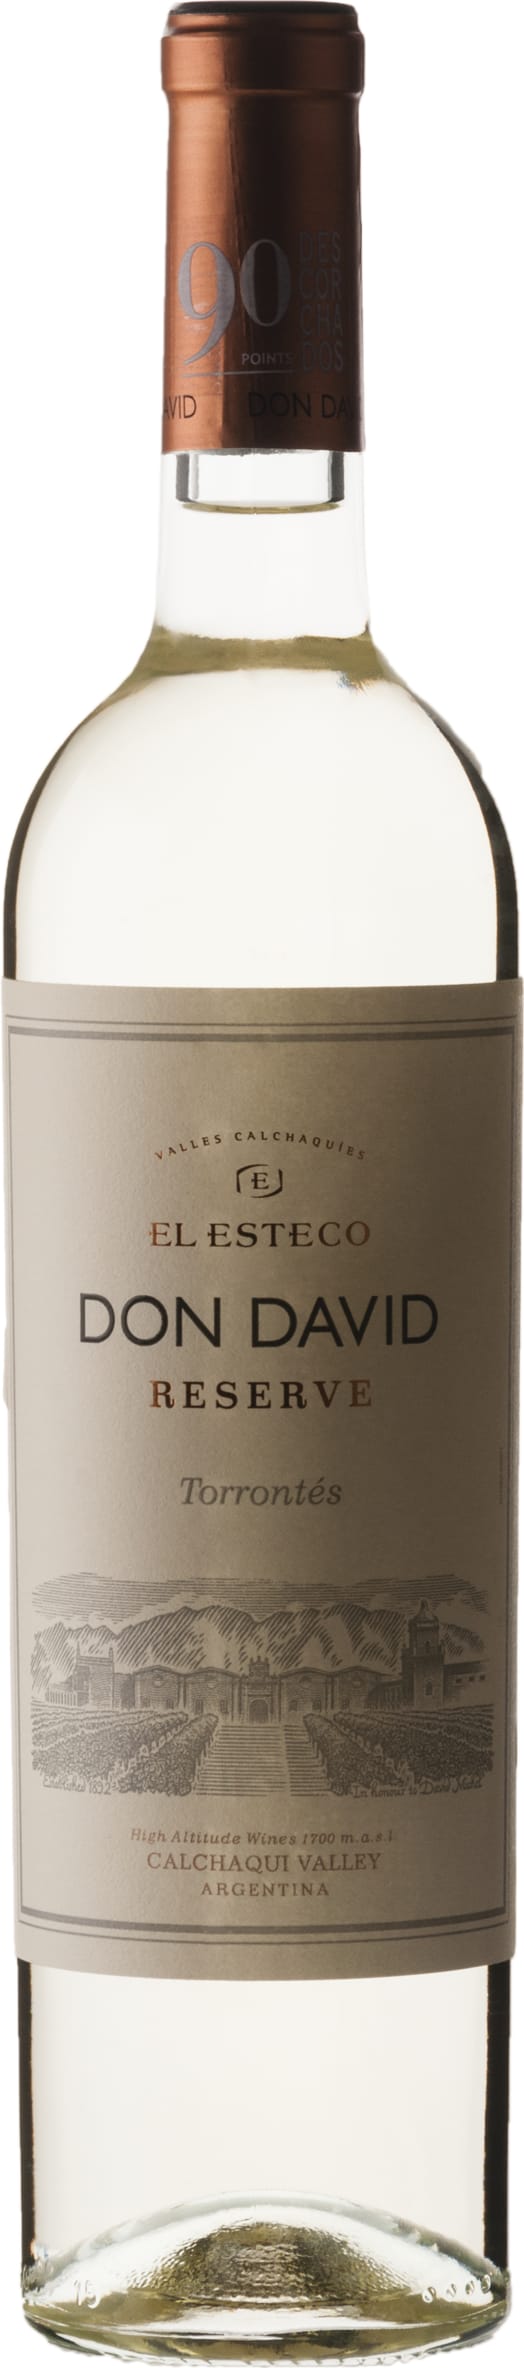 El Esteco Don David Torrontes 2022 6x75cl - Just Wines 